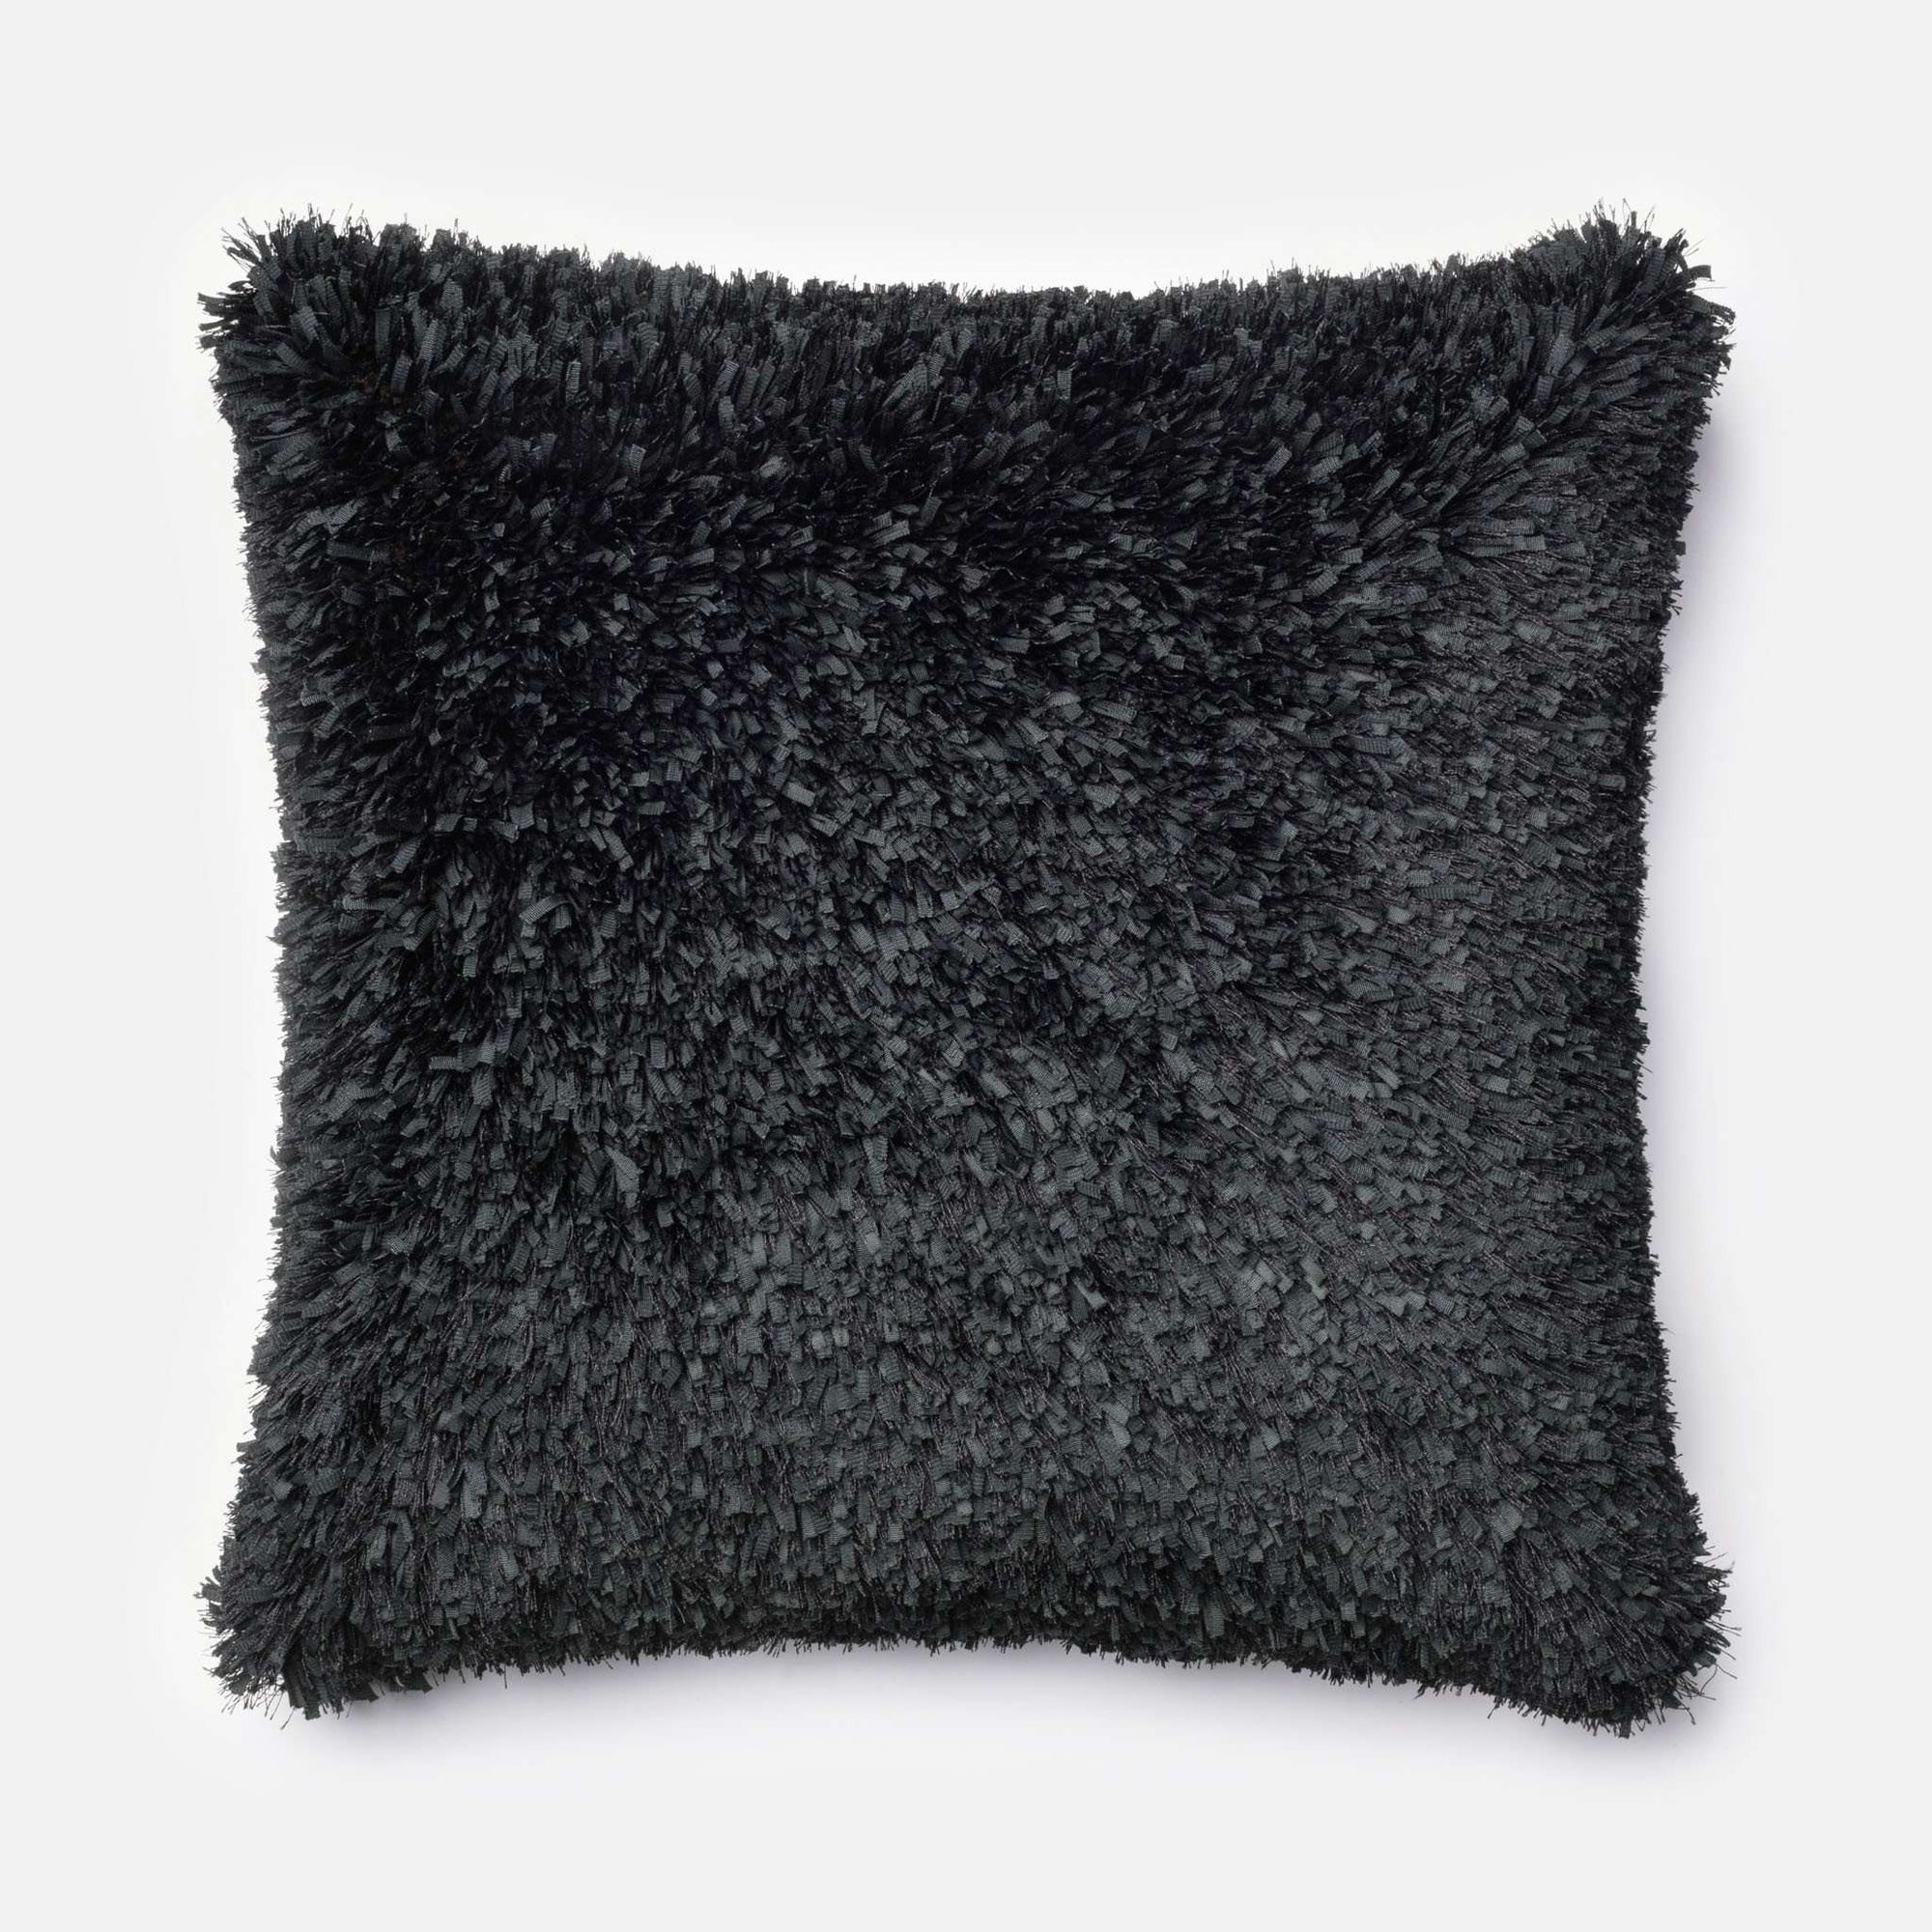 Black Square P0045 Pillow - Rug & Home